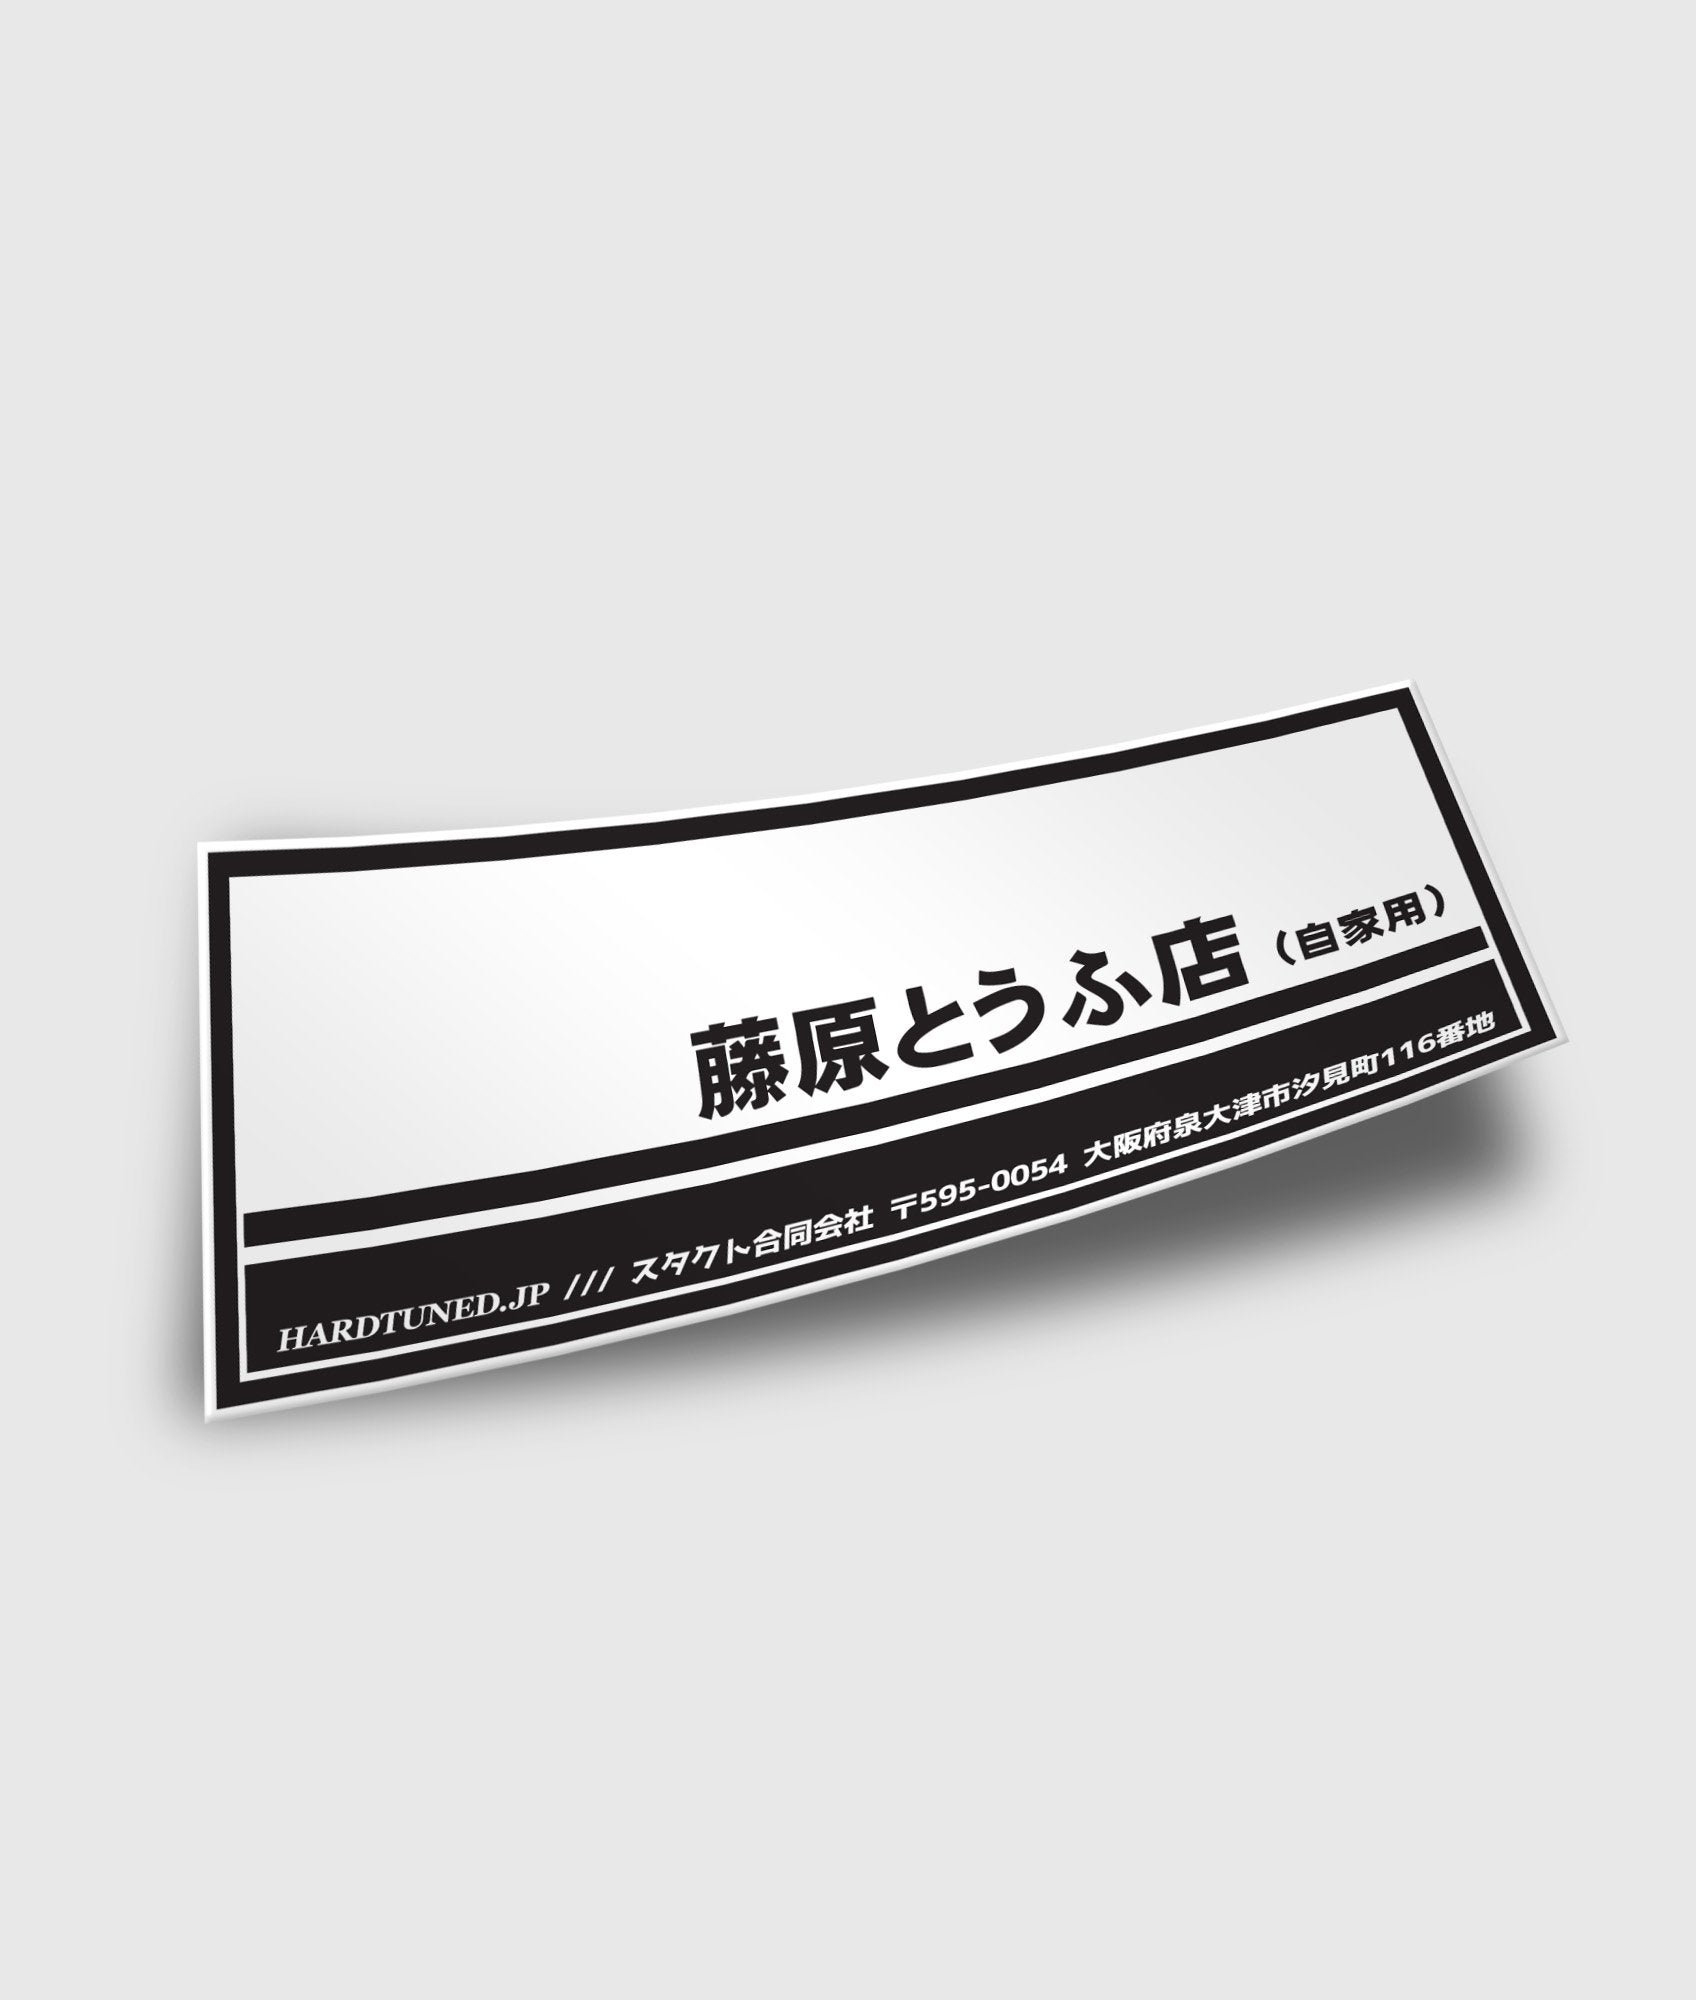 Fujiwara Tofu Sticker - Hardtuned